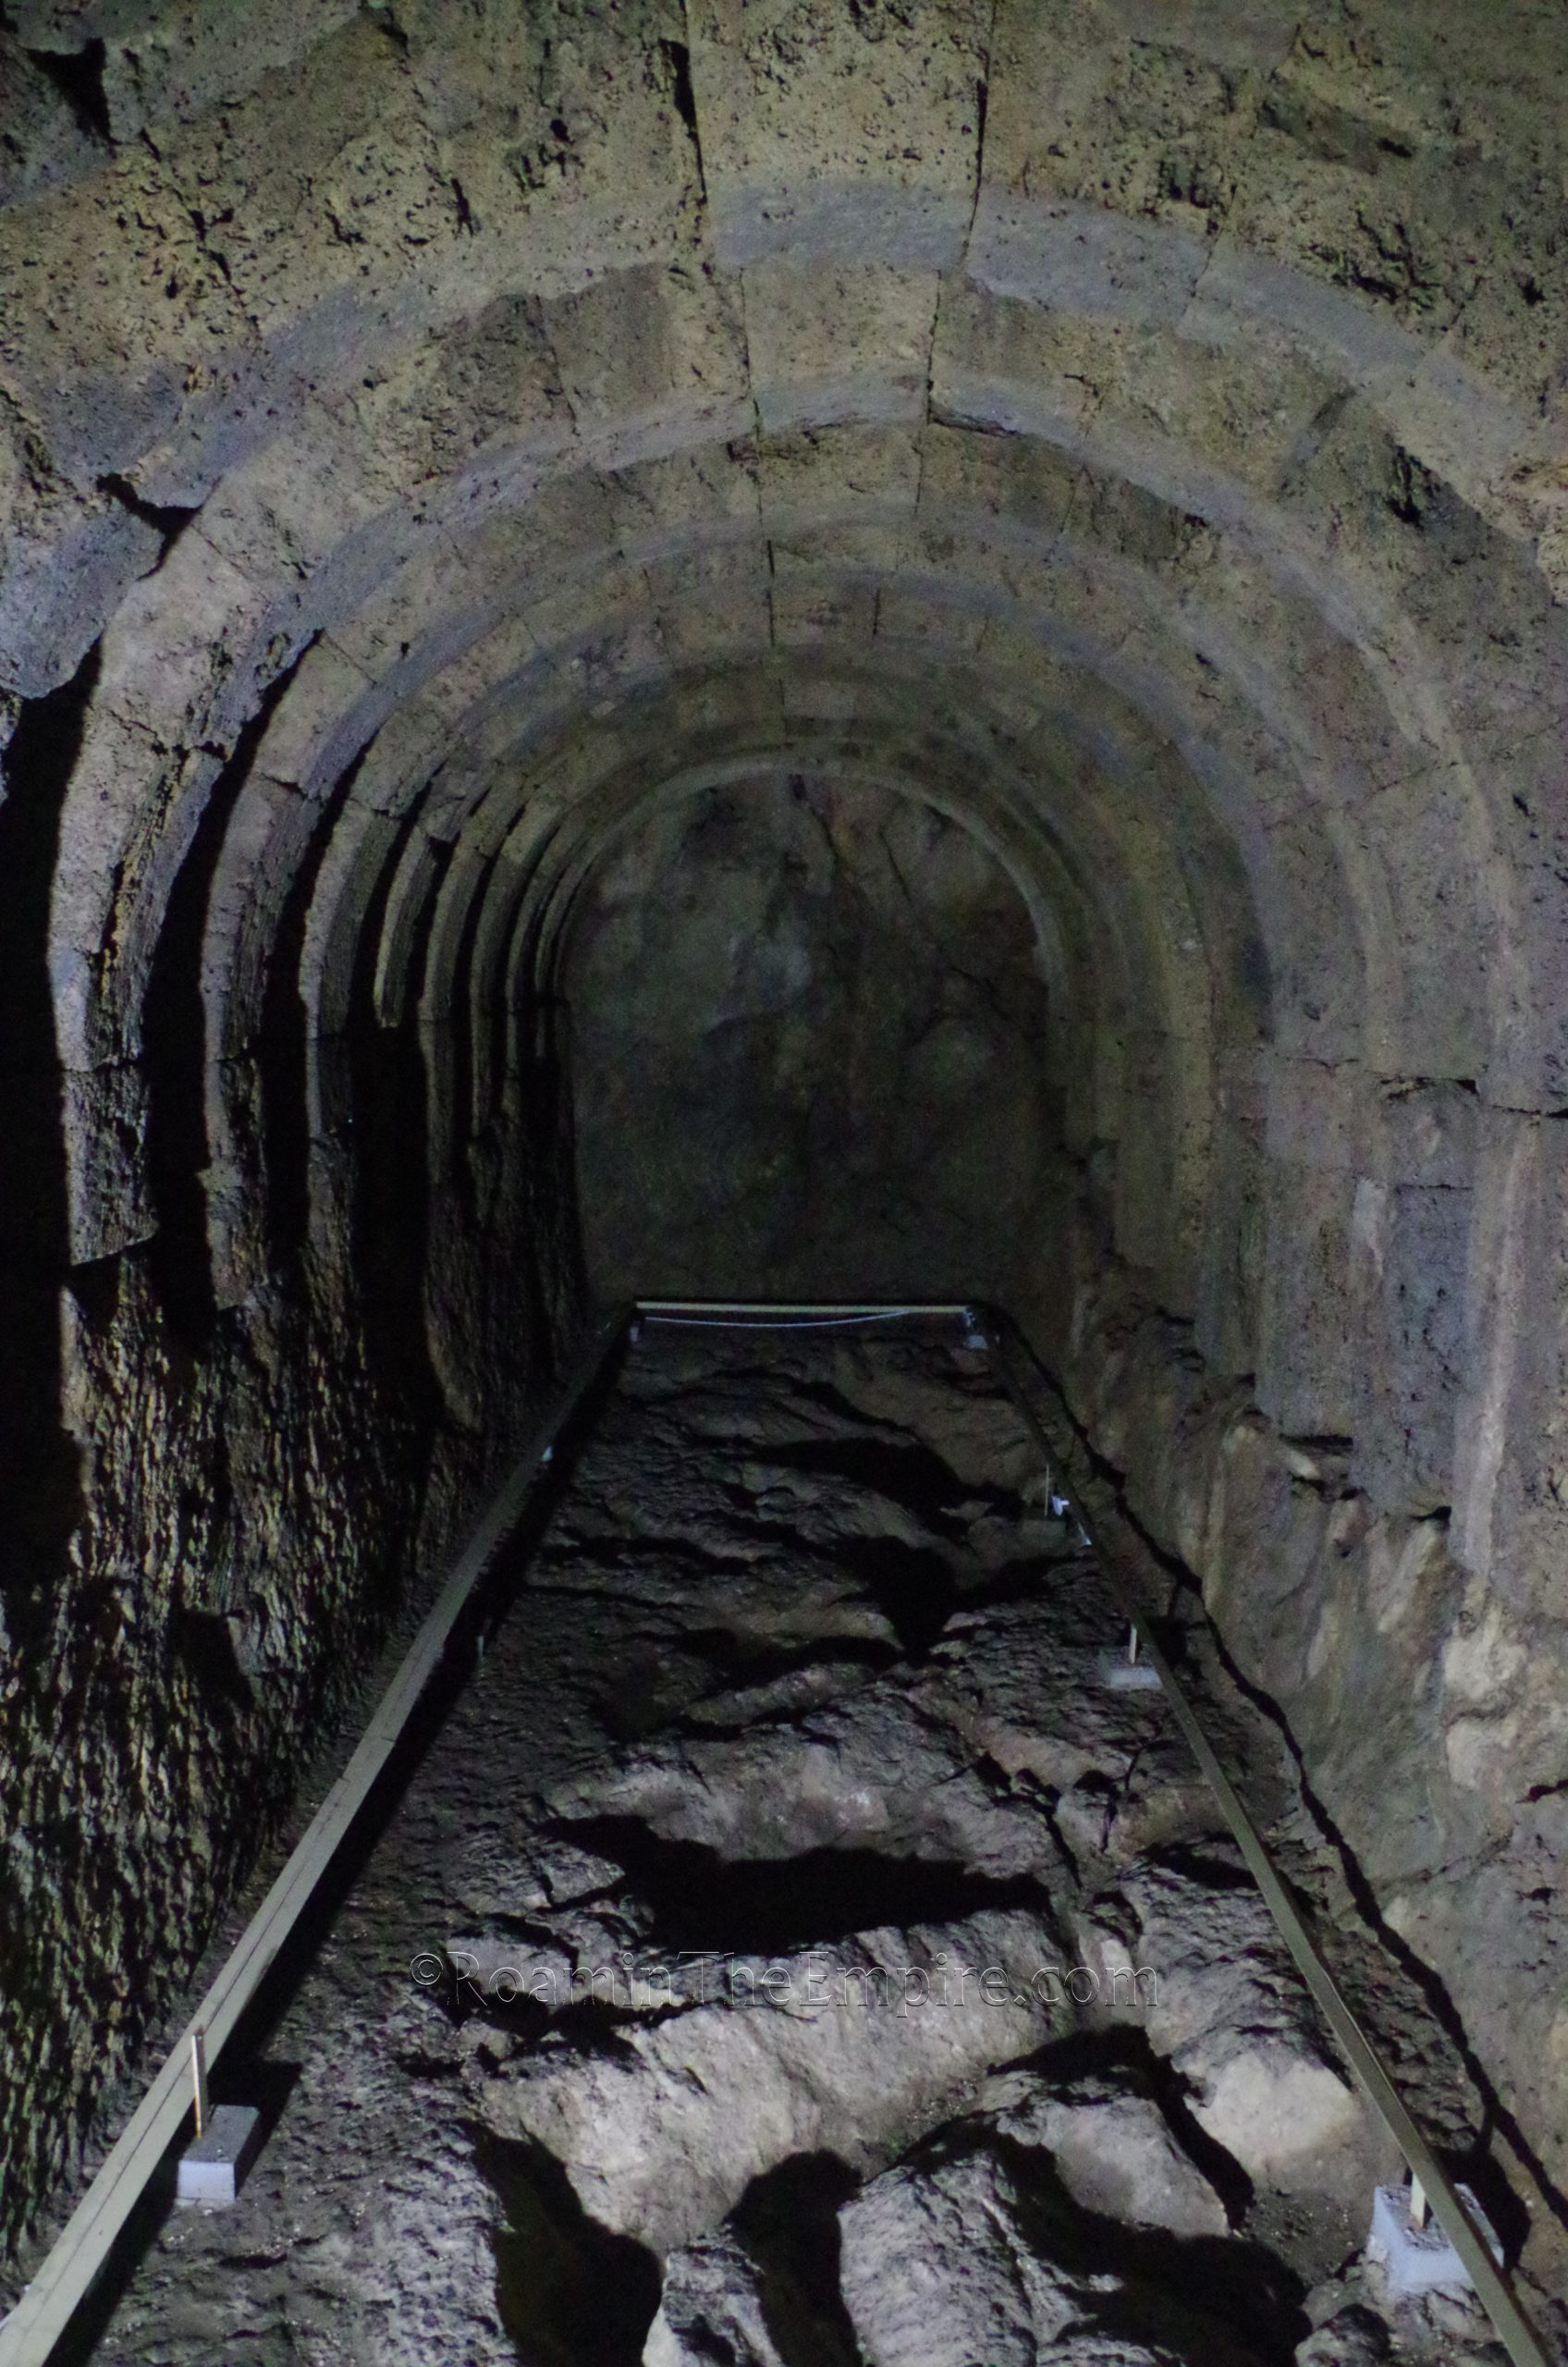 Underground chamber of the Necromanteion.